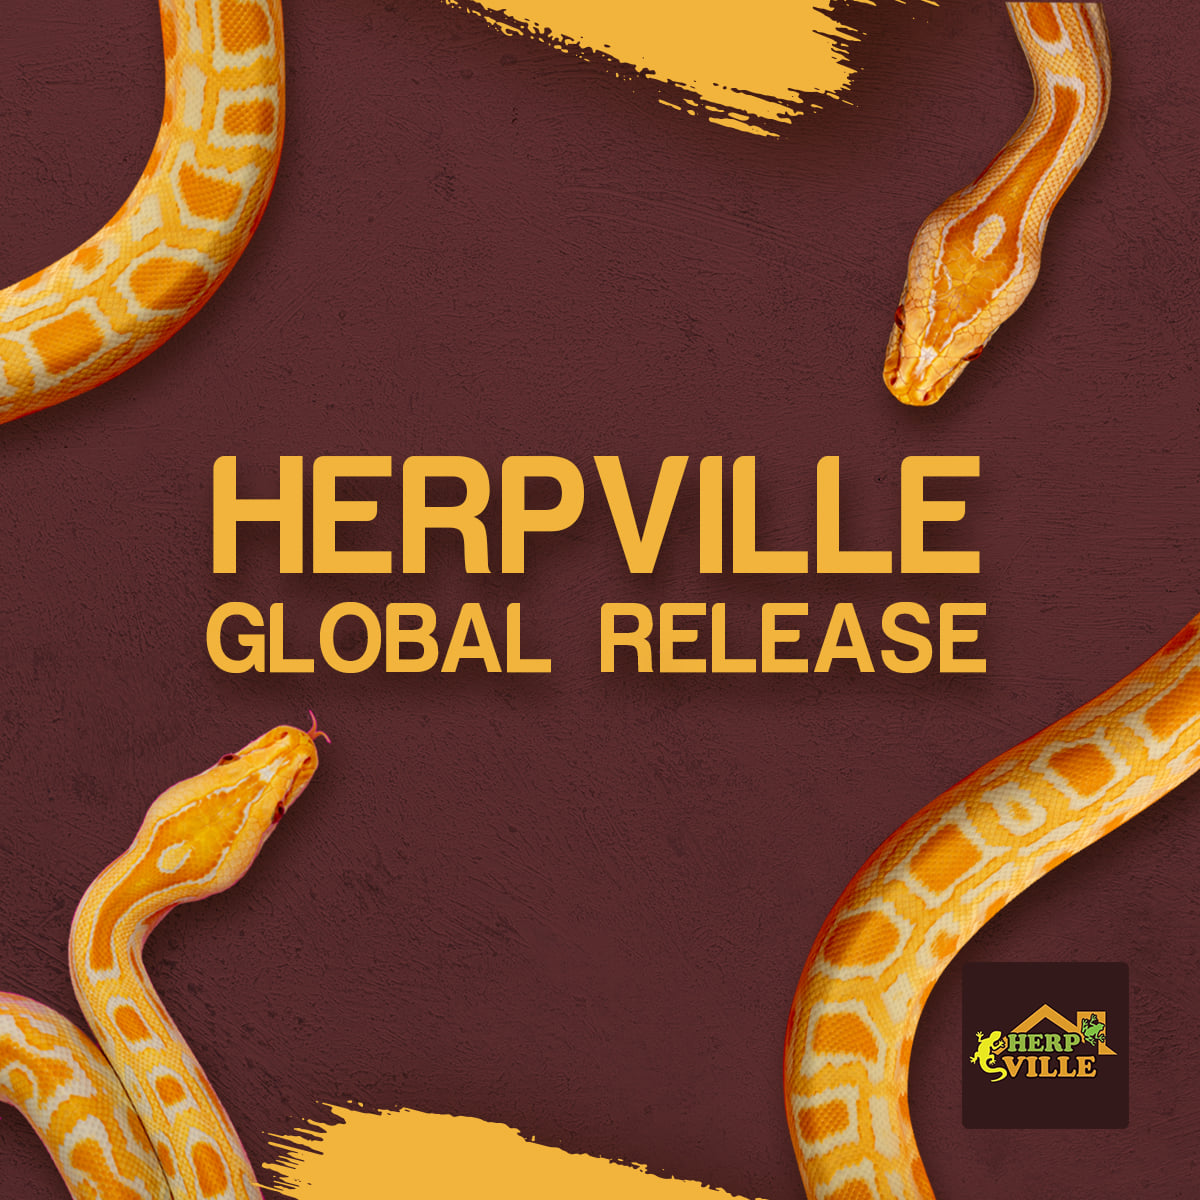 Herpville global release